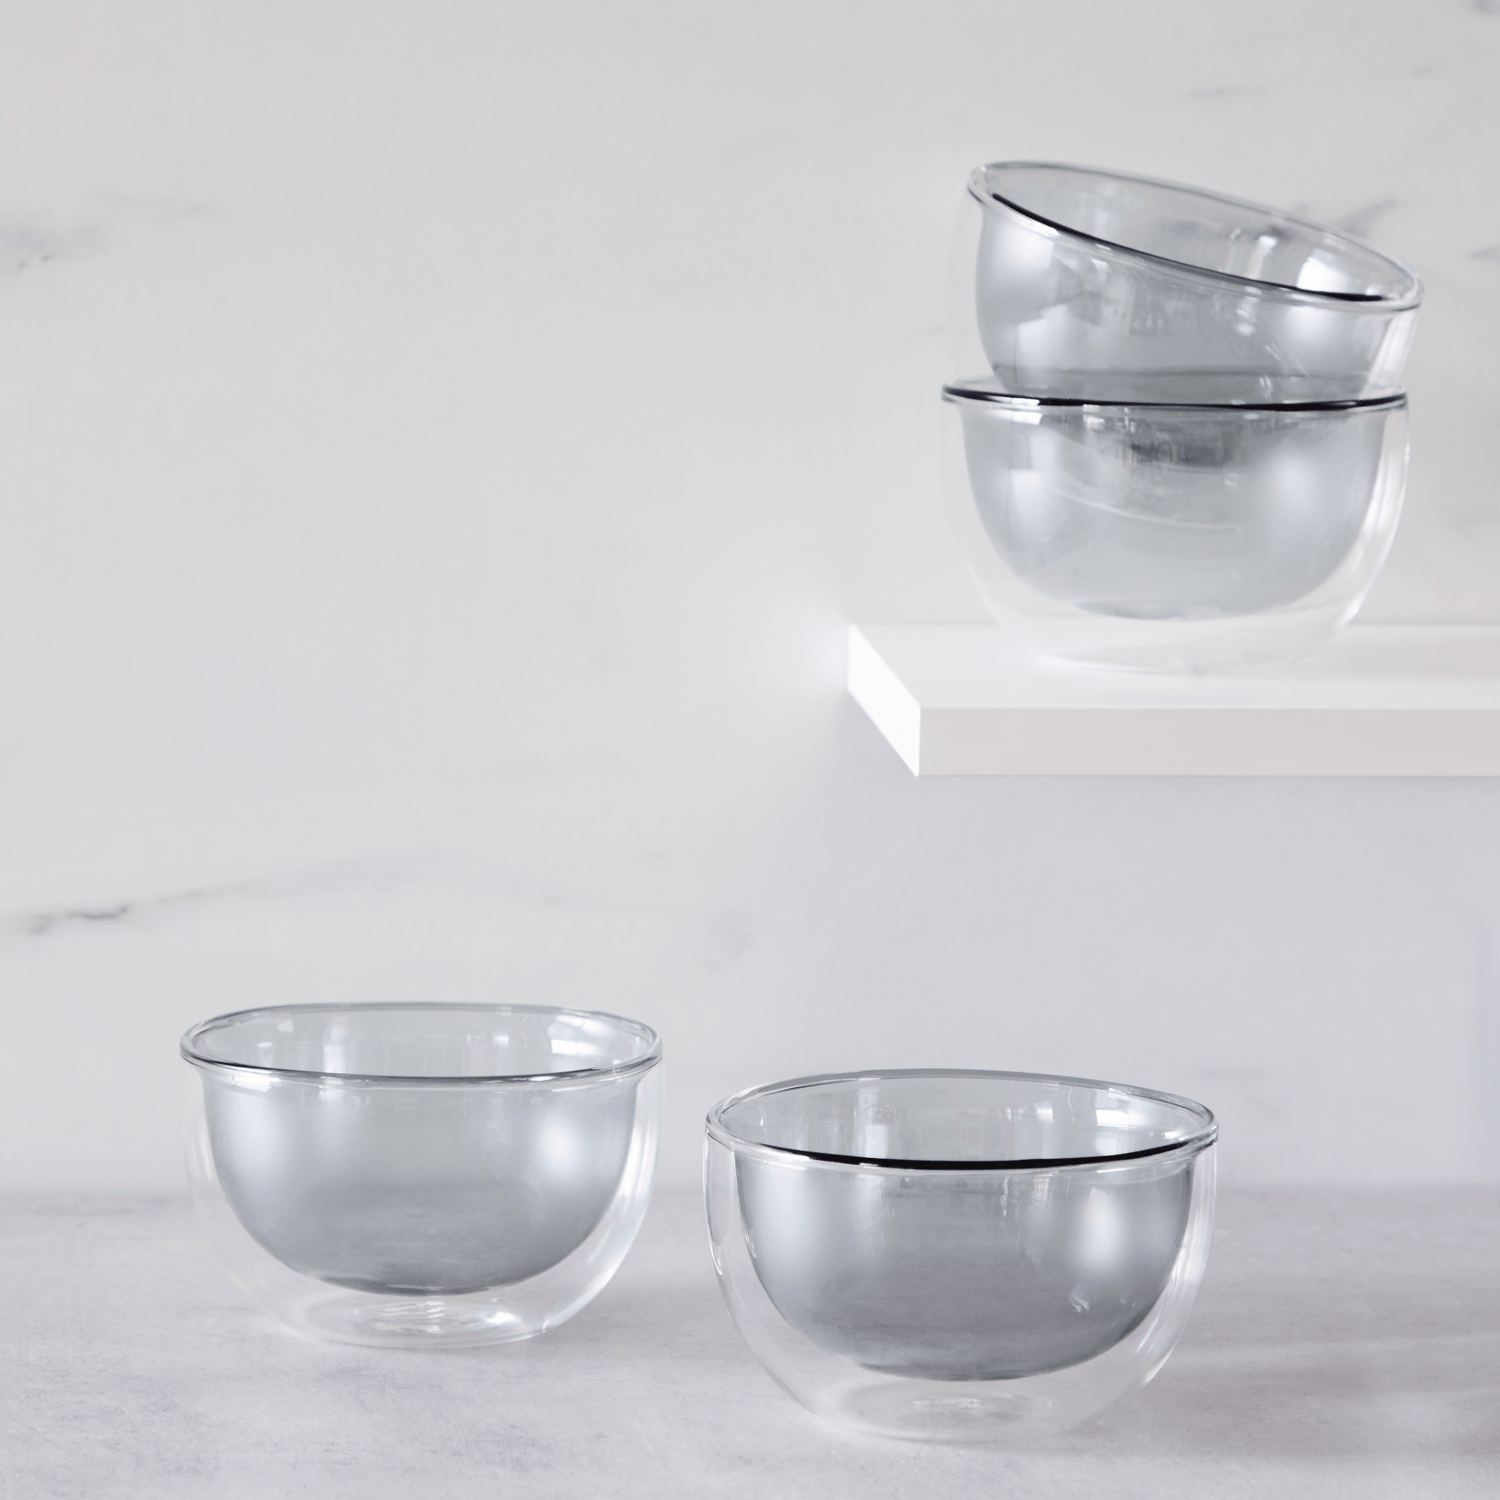  KooK Small Glass Prep Bowls with Lids Set, Clear Mini